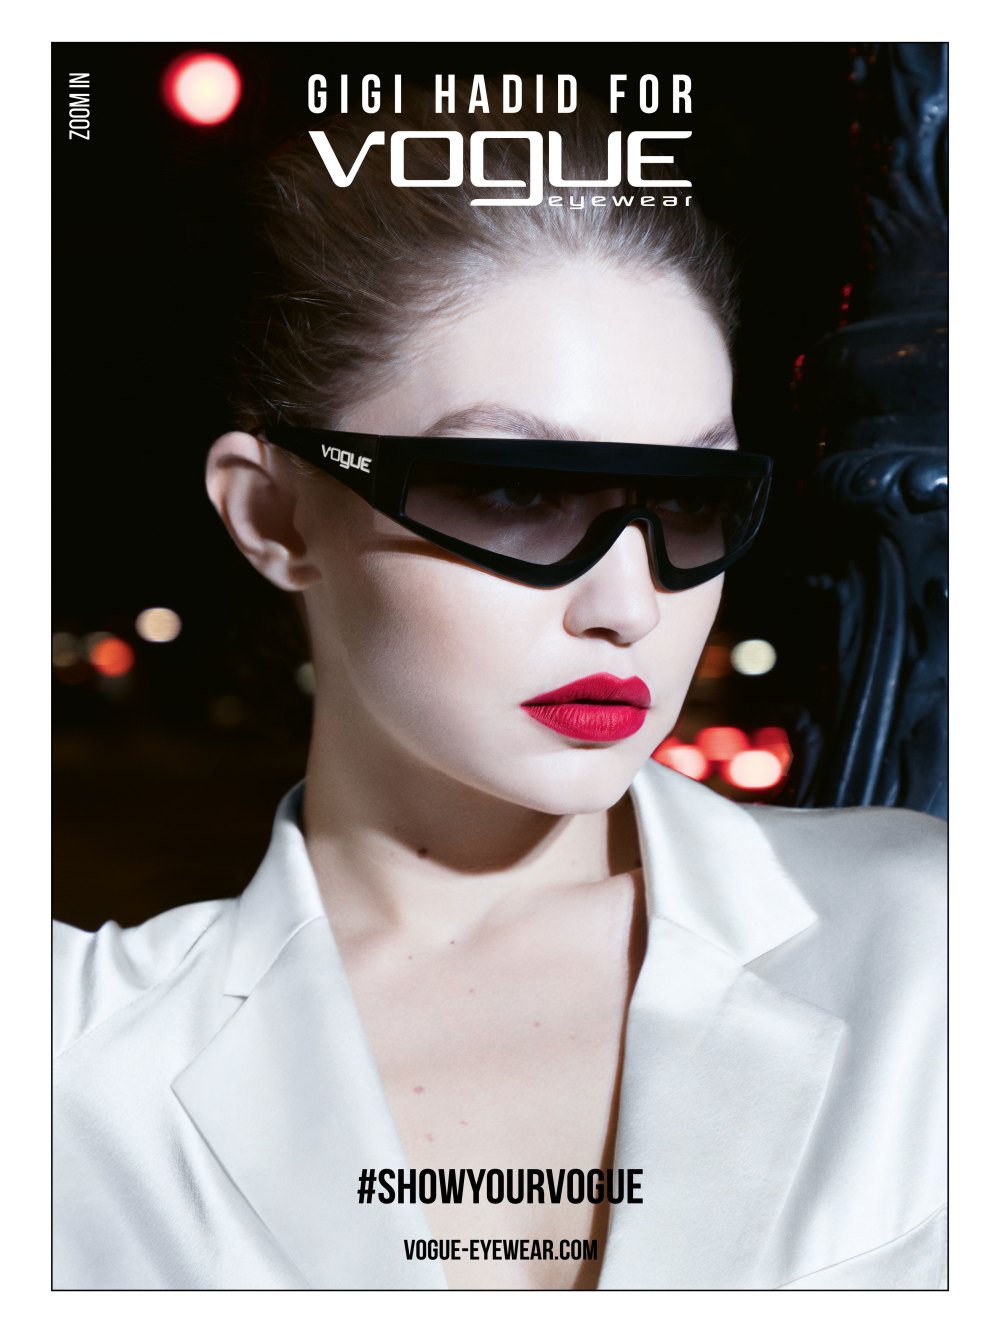 The New Gigi Hadid x Vogue Eyewear Collection Is Here